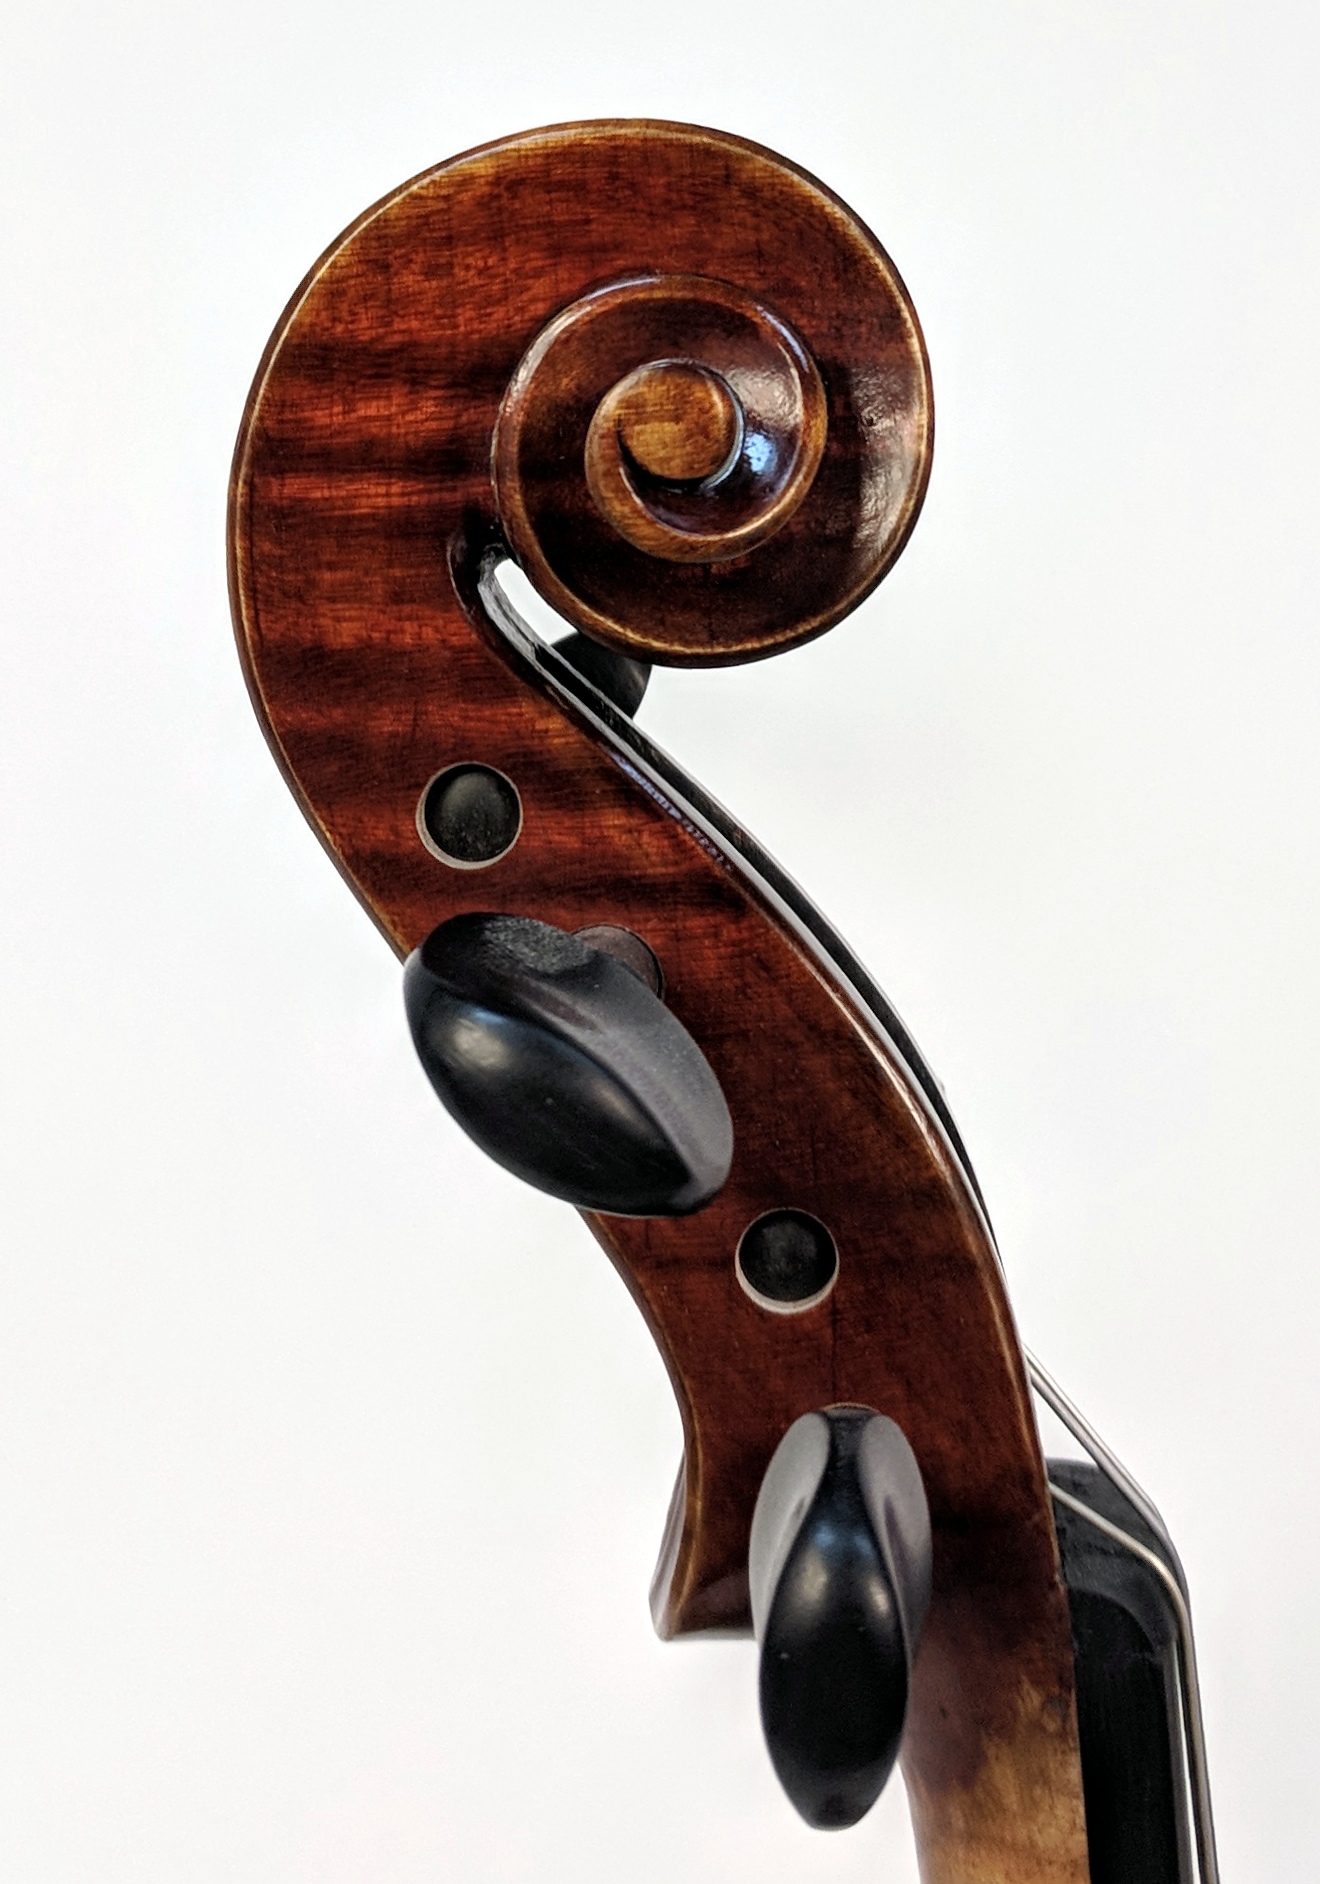  Moon River Violin, 2017   